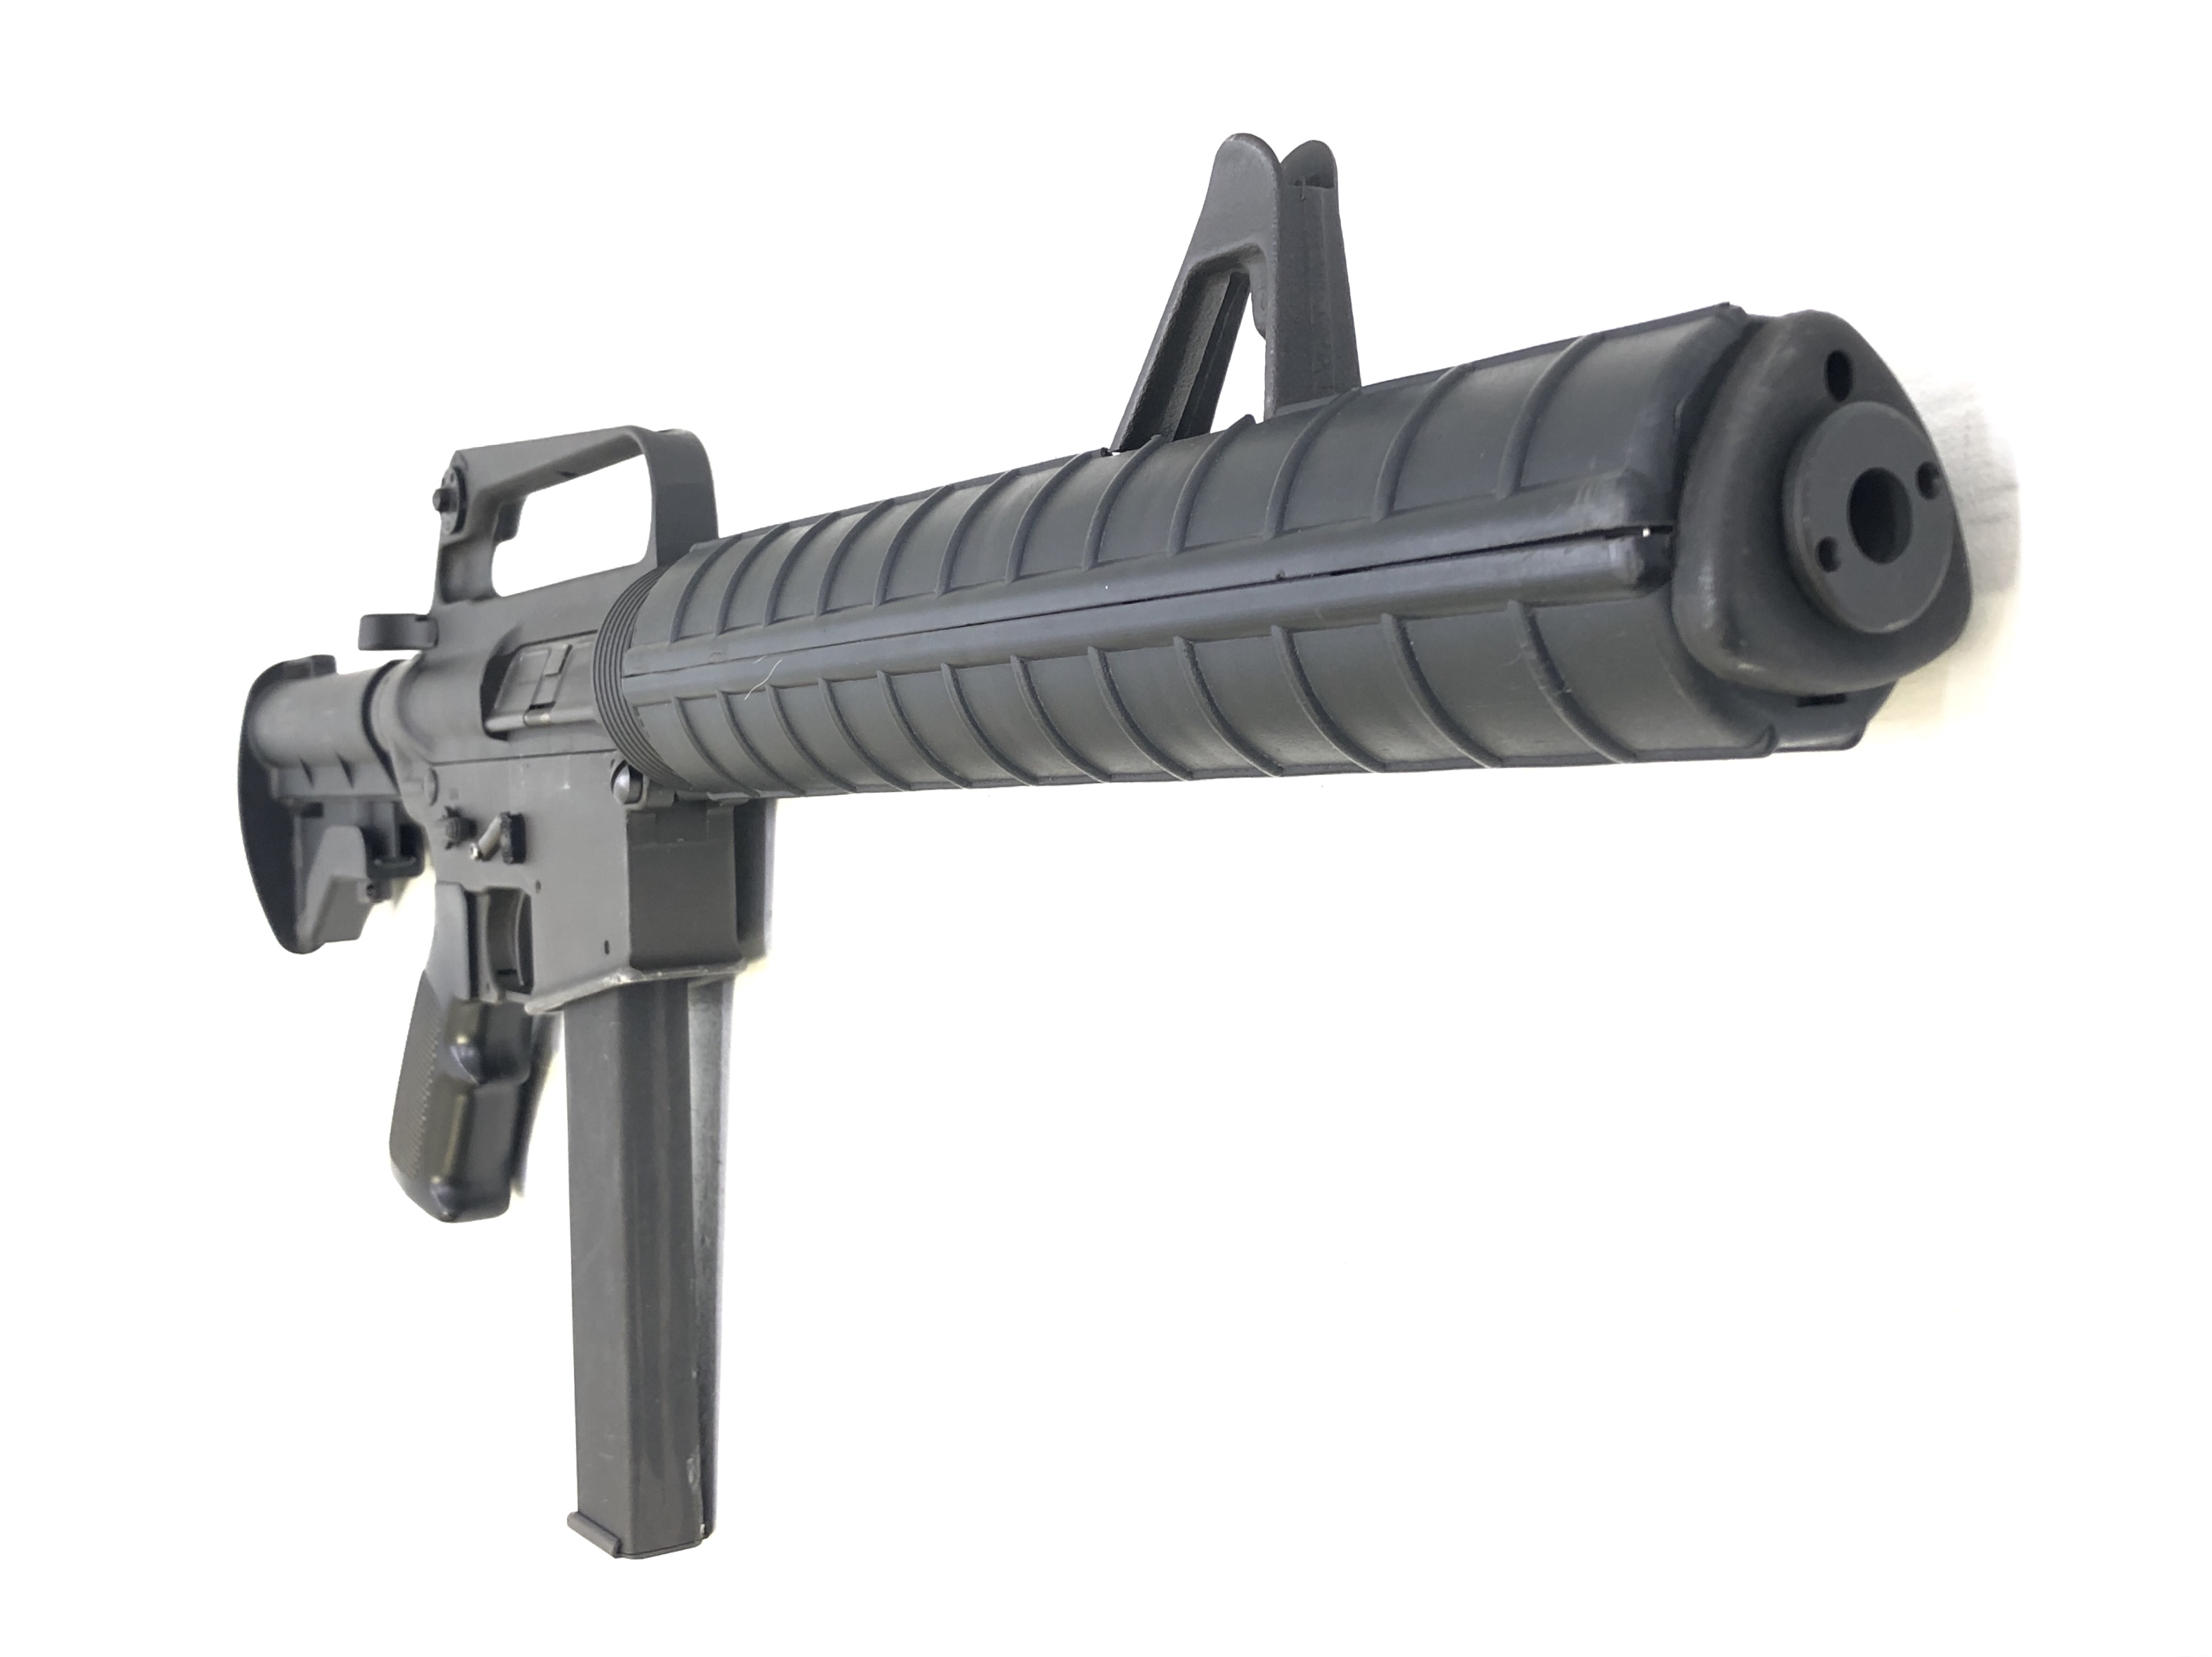 GunSpot Colt AR 15 9mm SMG Integrally Suppressed Transferable Machine Gun.